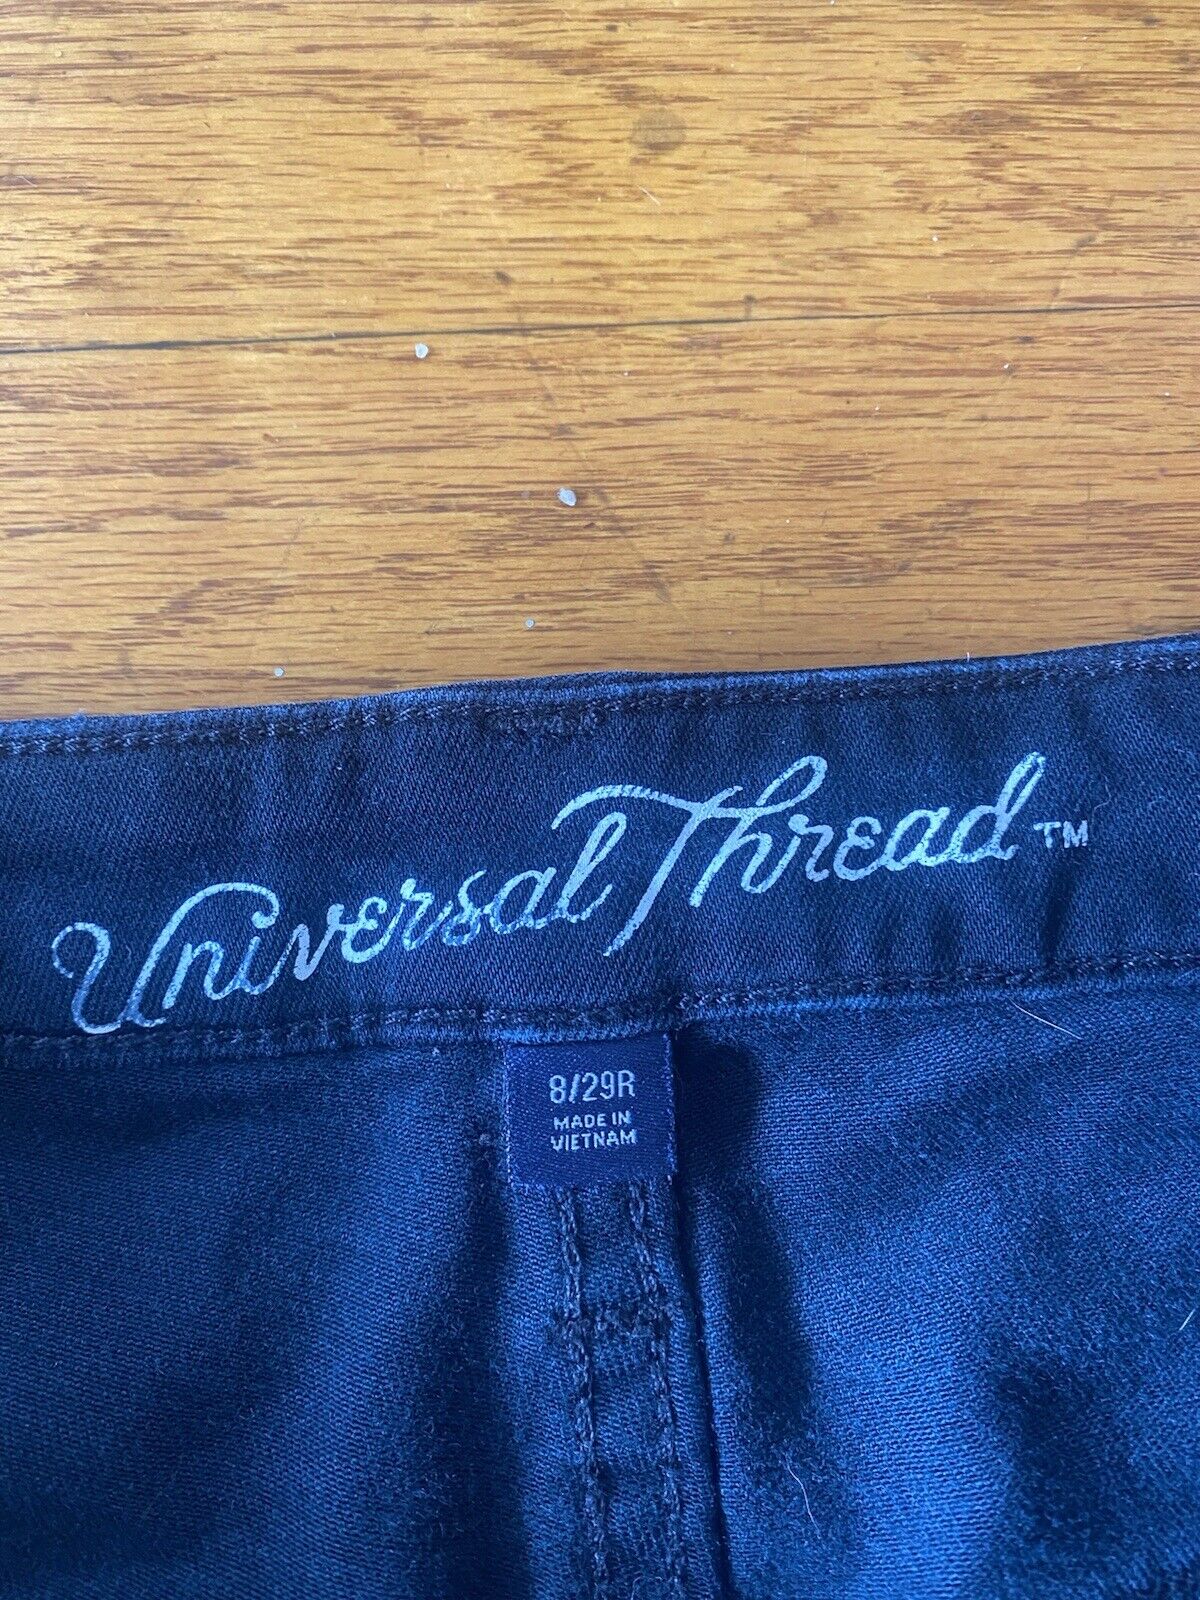 Black Highest Rise Skinny Jeans - Universal Thread - Size 8